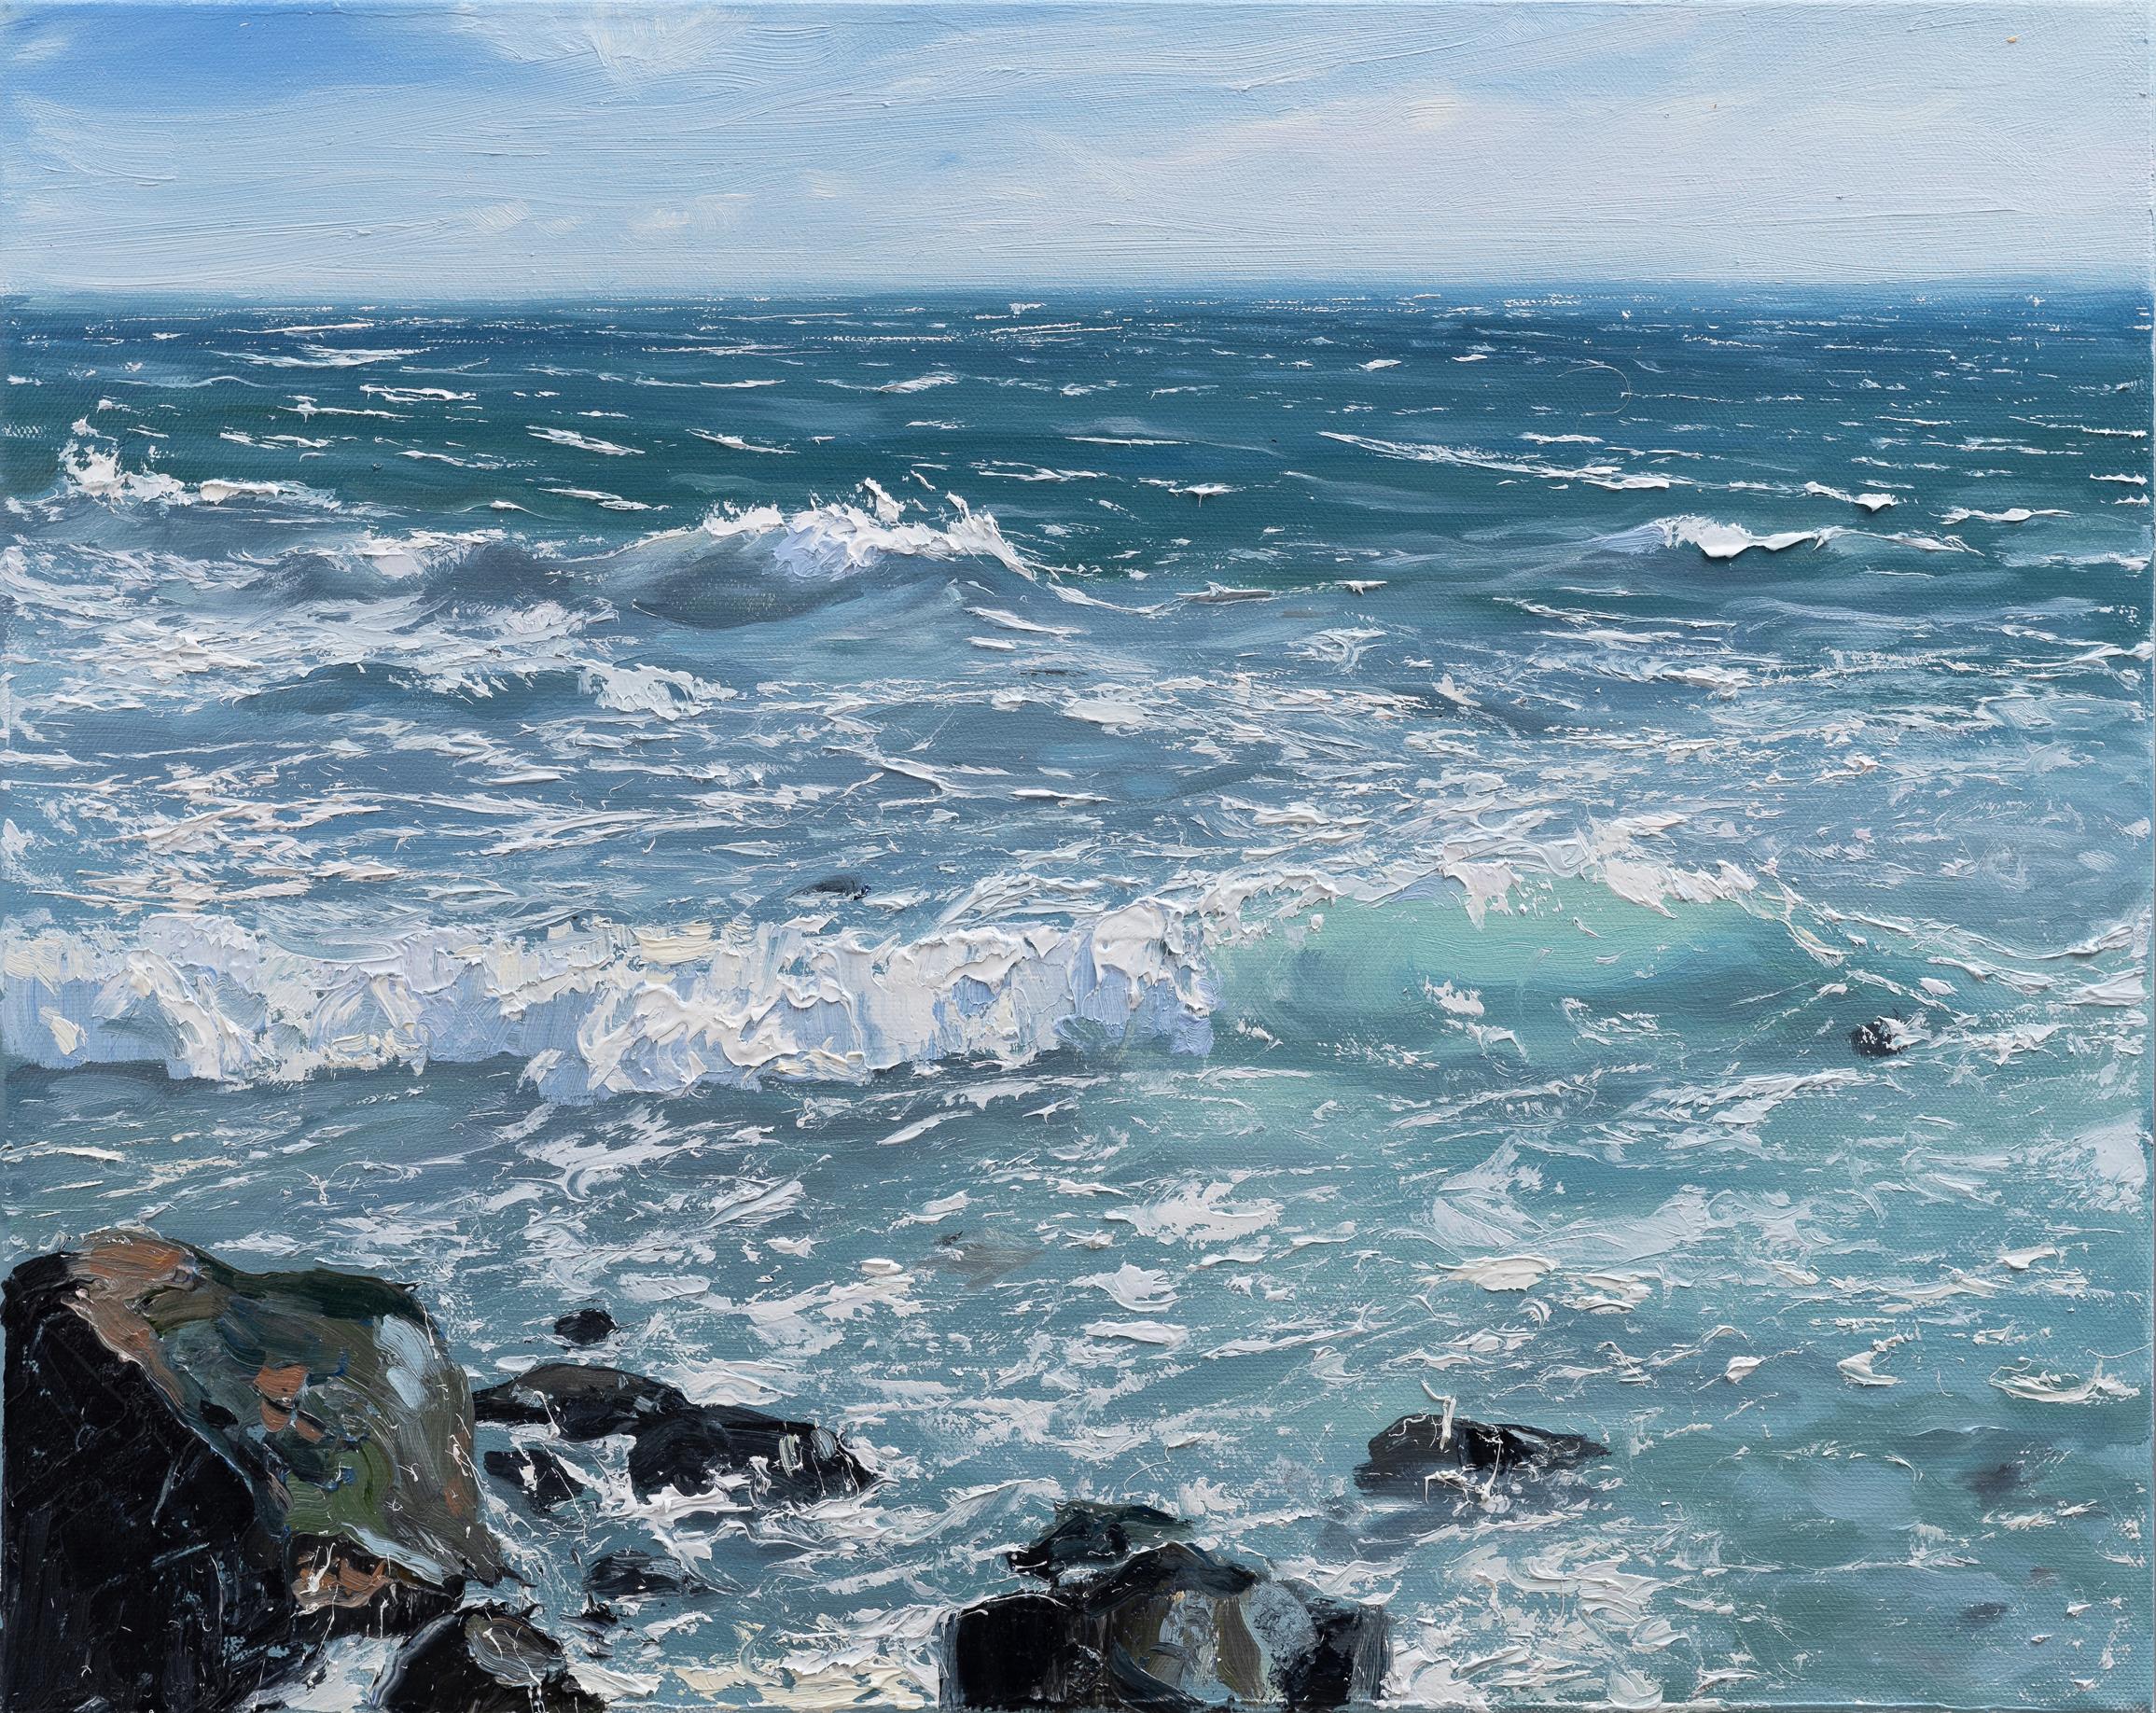 Annie Wildey Landscape Painting - "Summer Rocks n' Surf I" oil painting of waves crashing on rocks in the ocean